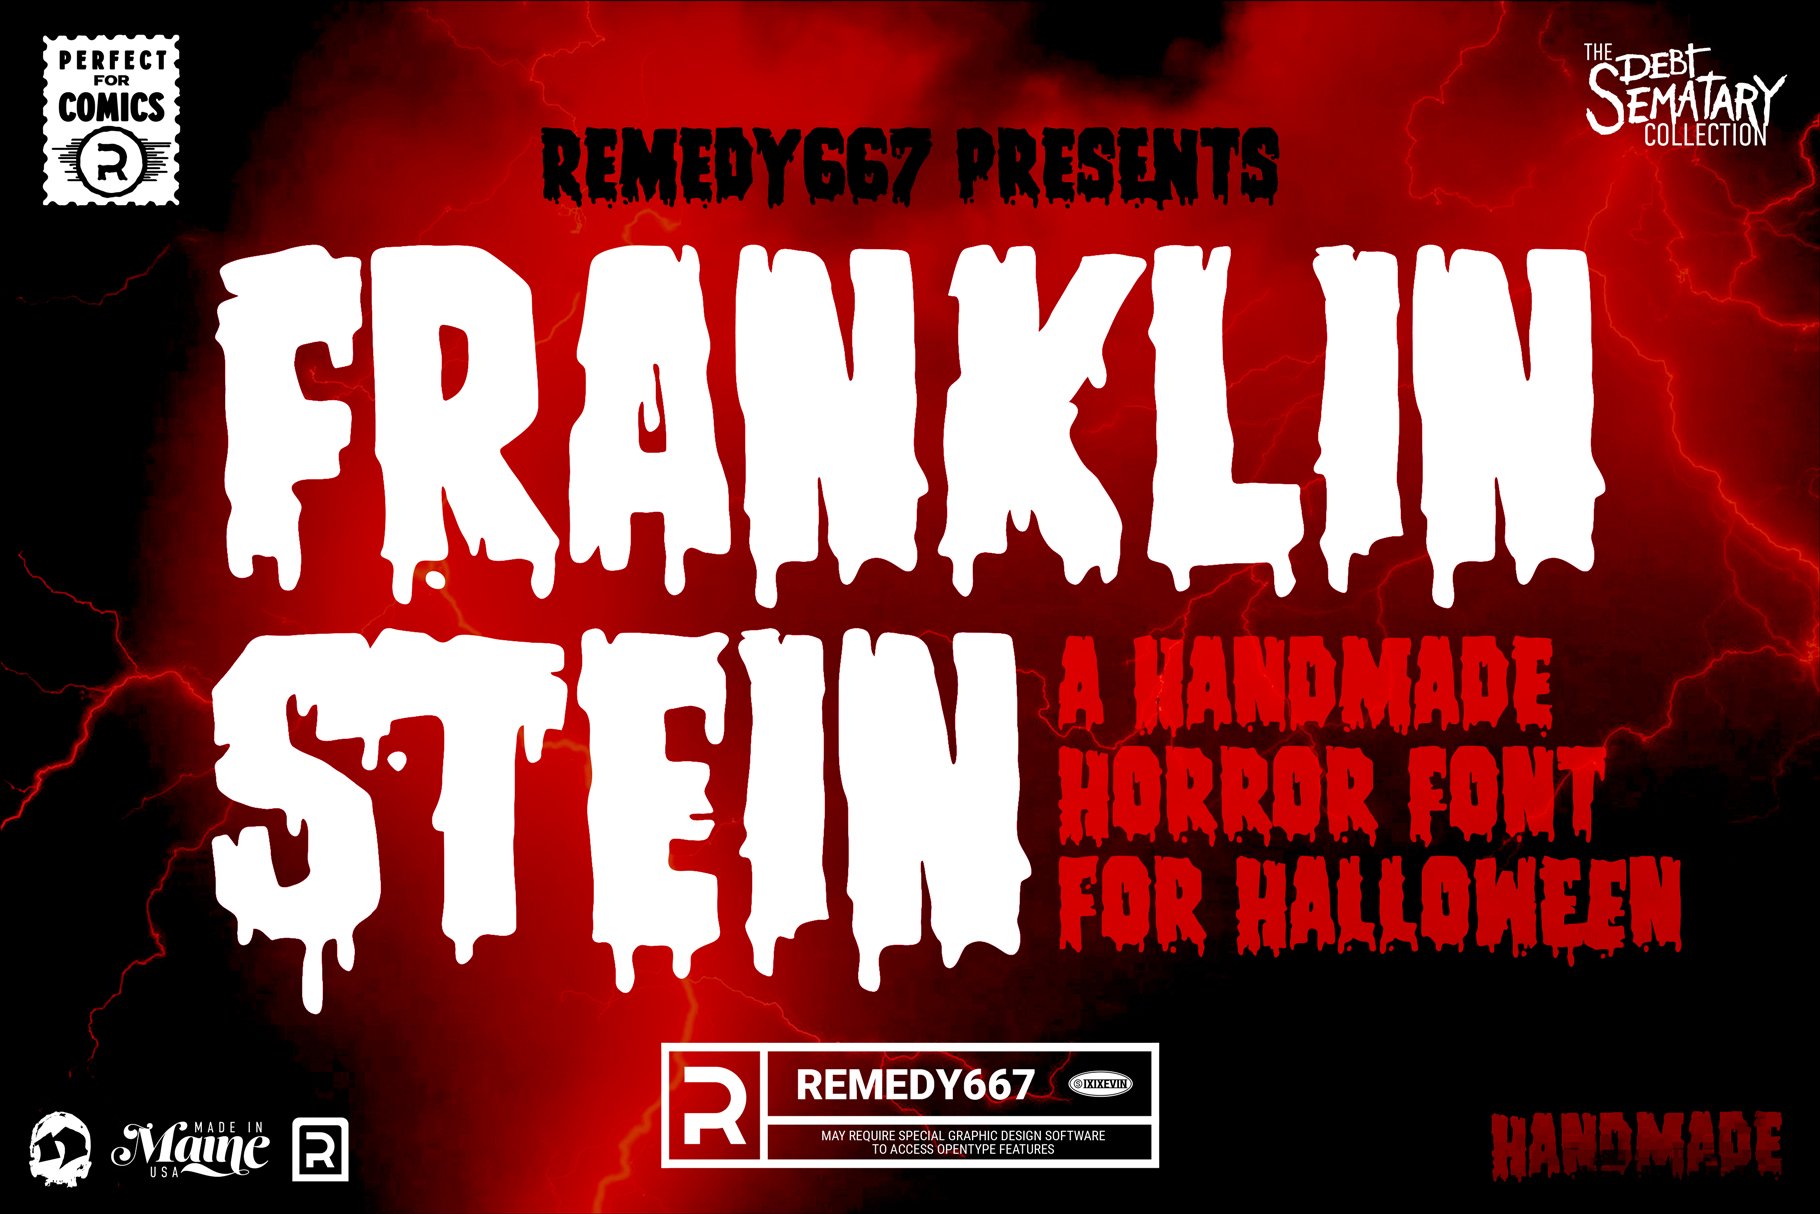 Franklinstein cover image.